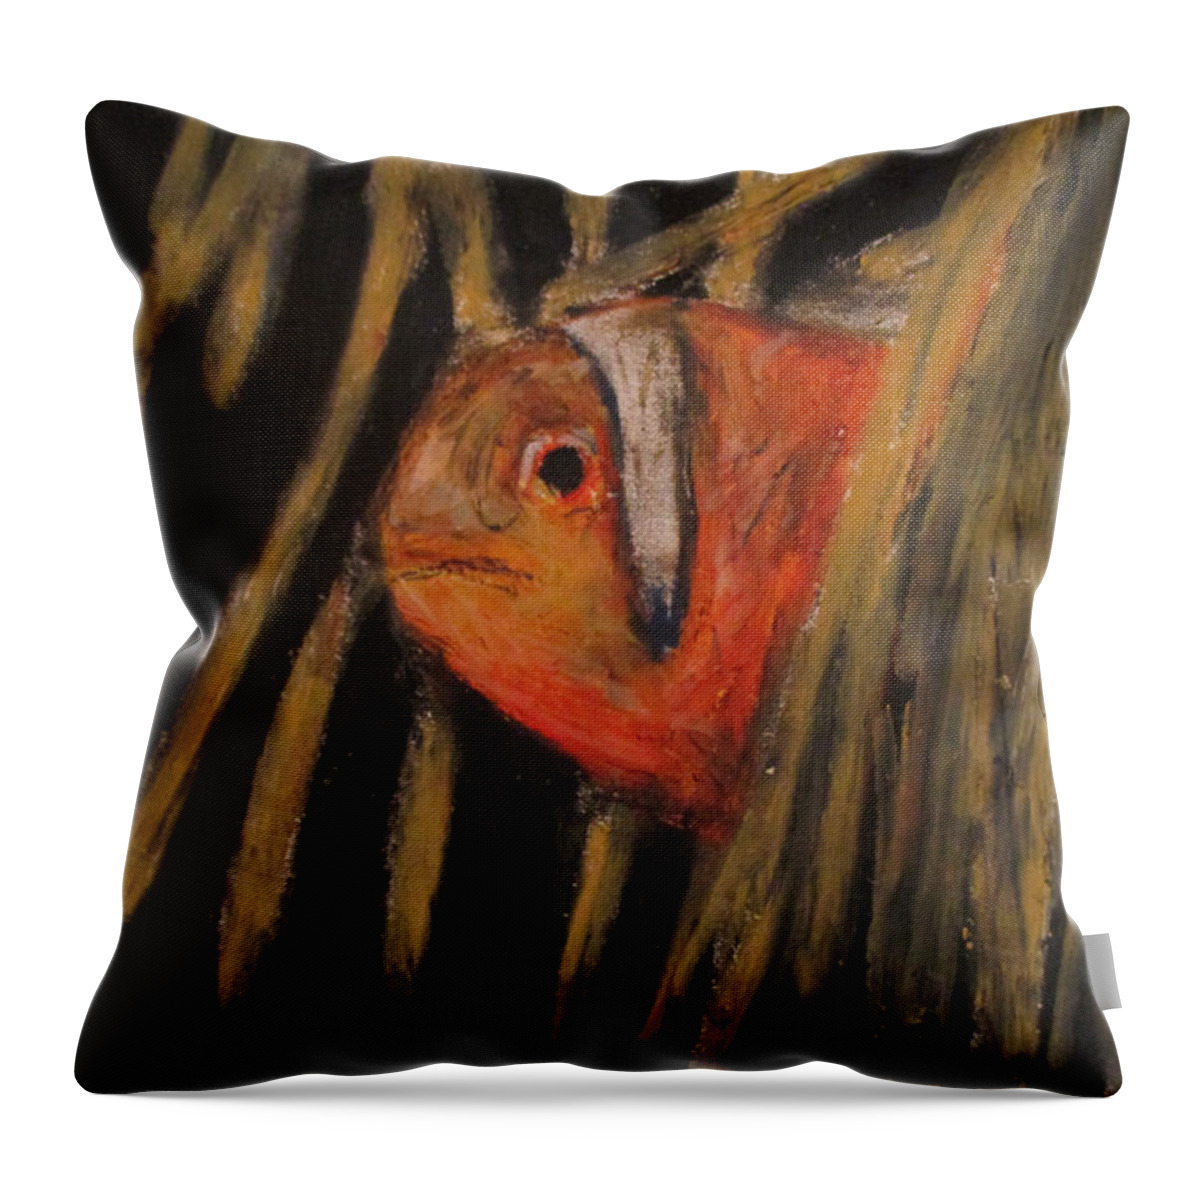 Clown Fish Throw Pillow featuring the painting Clown Fishy by Jen Shearer